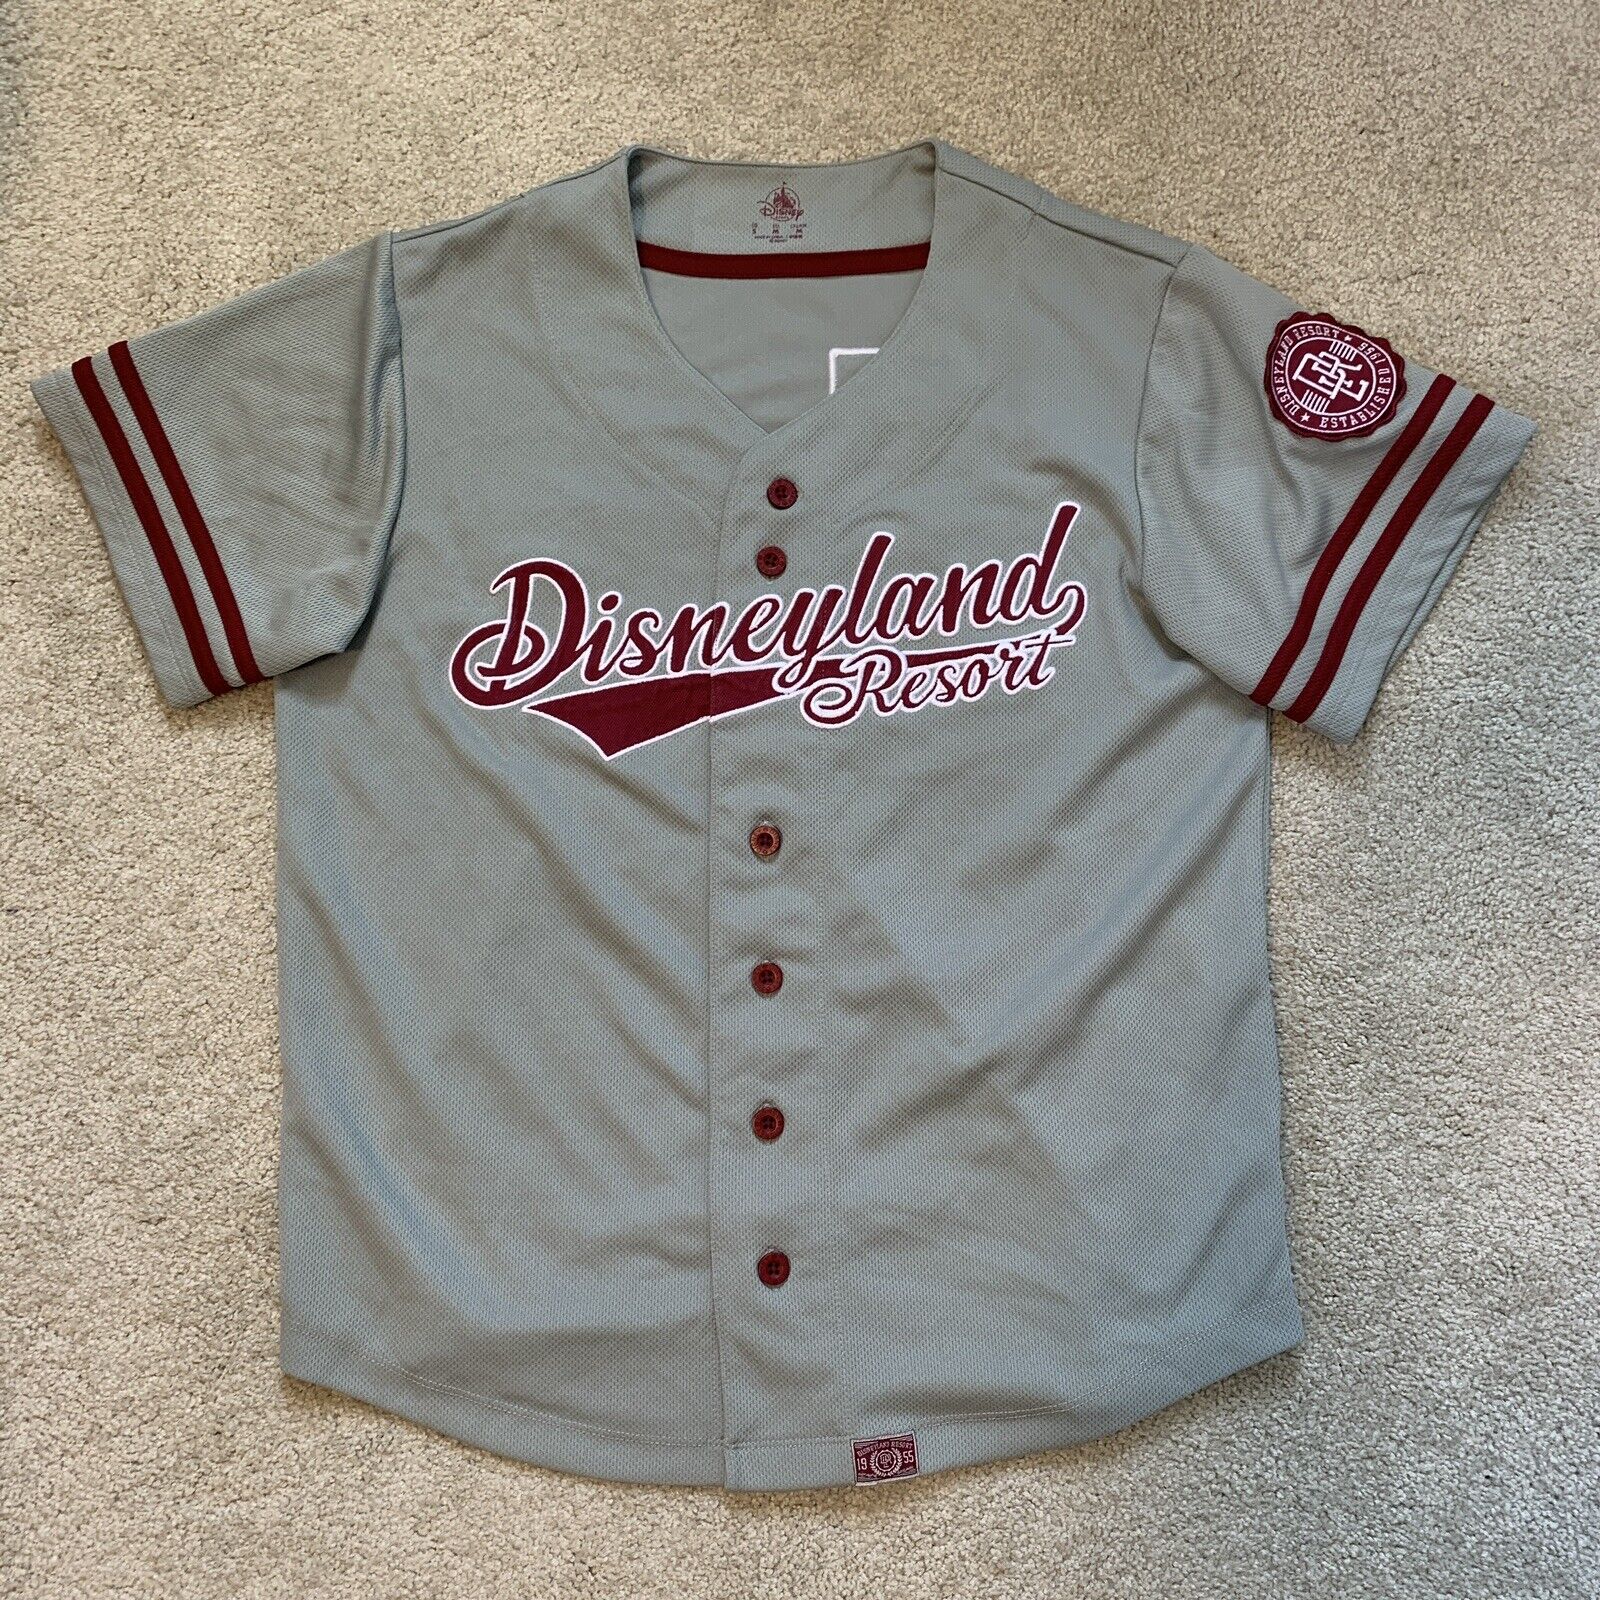 Disneyland Resort Jersey Men’s Small Gray/Burgundy Baseball Performance Shirt S